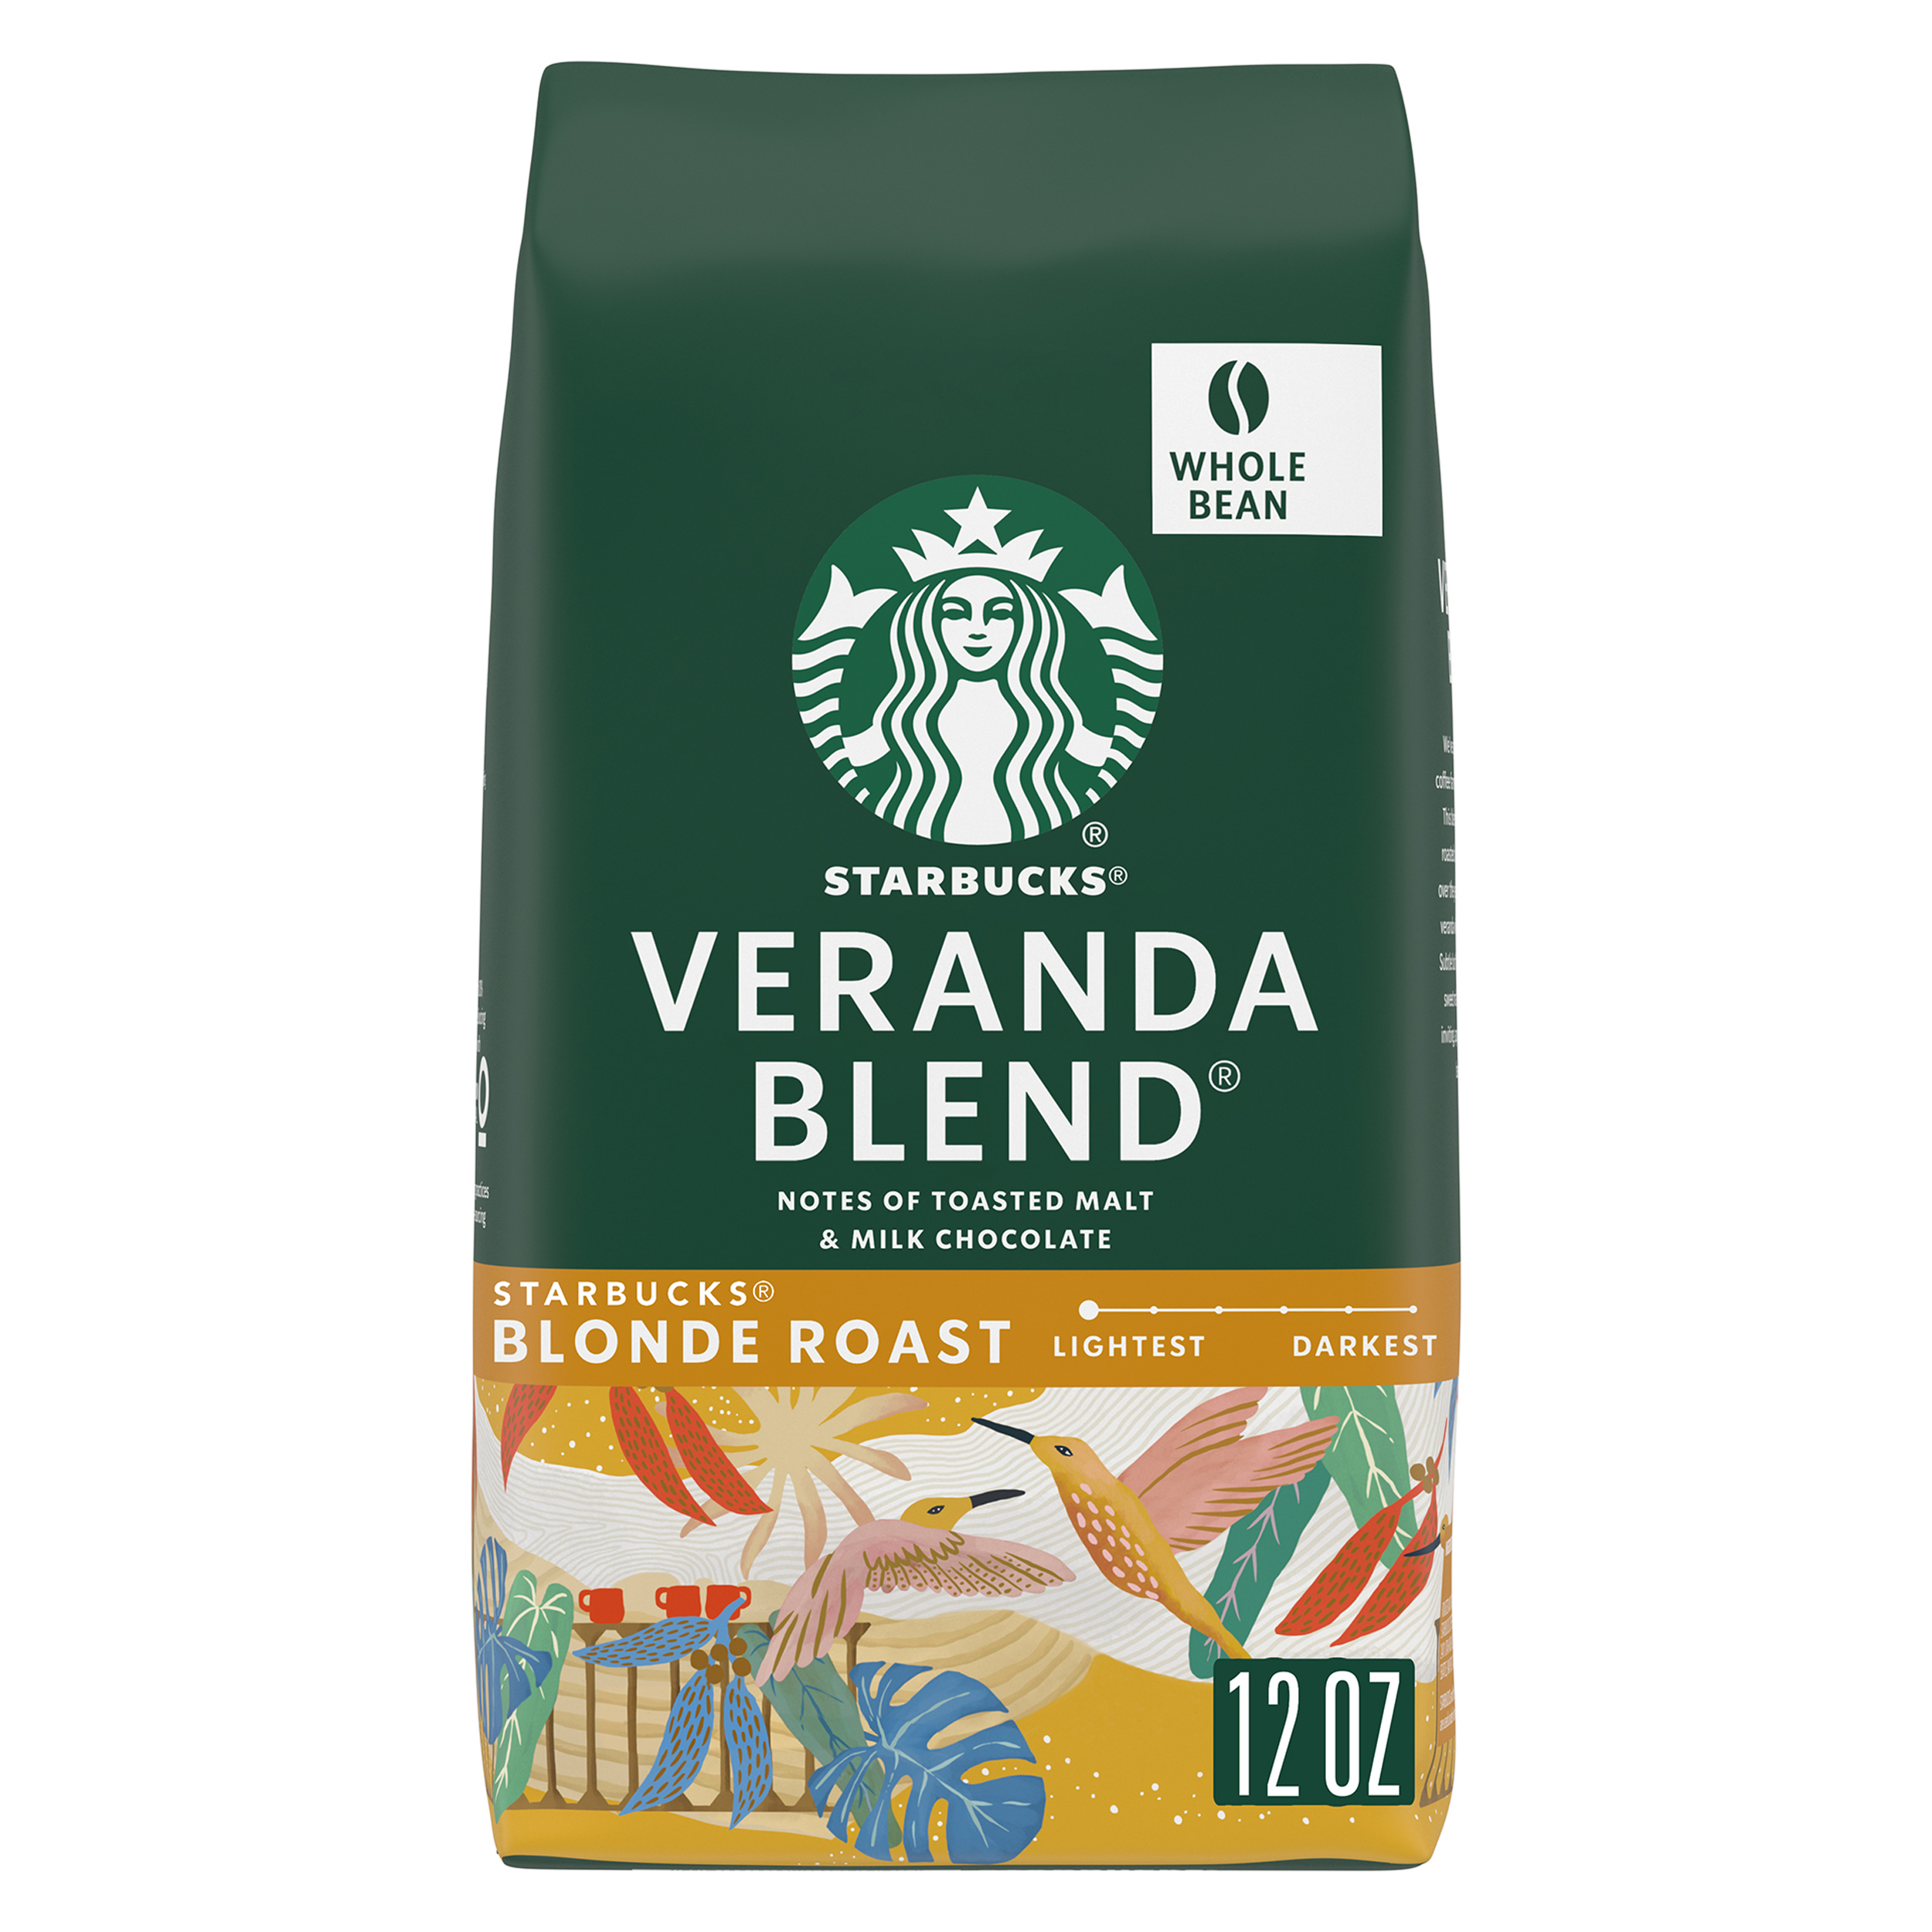 Starbucks Veranda Blend, Whole Bean Coffee, Starbucks Blonde Roast, 12 oz - image 1 of 8